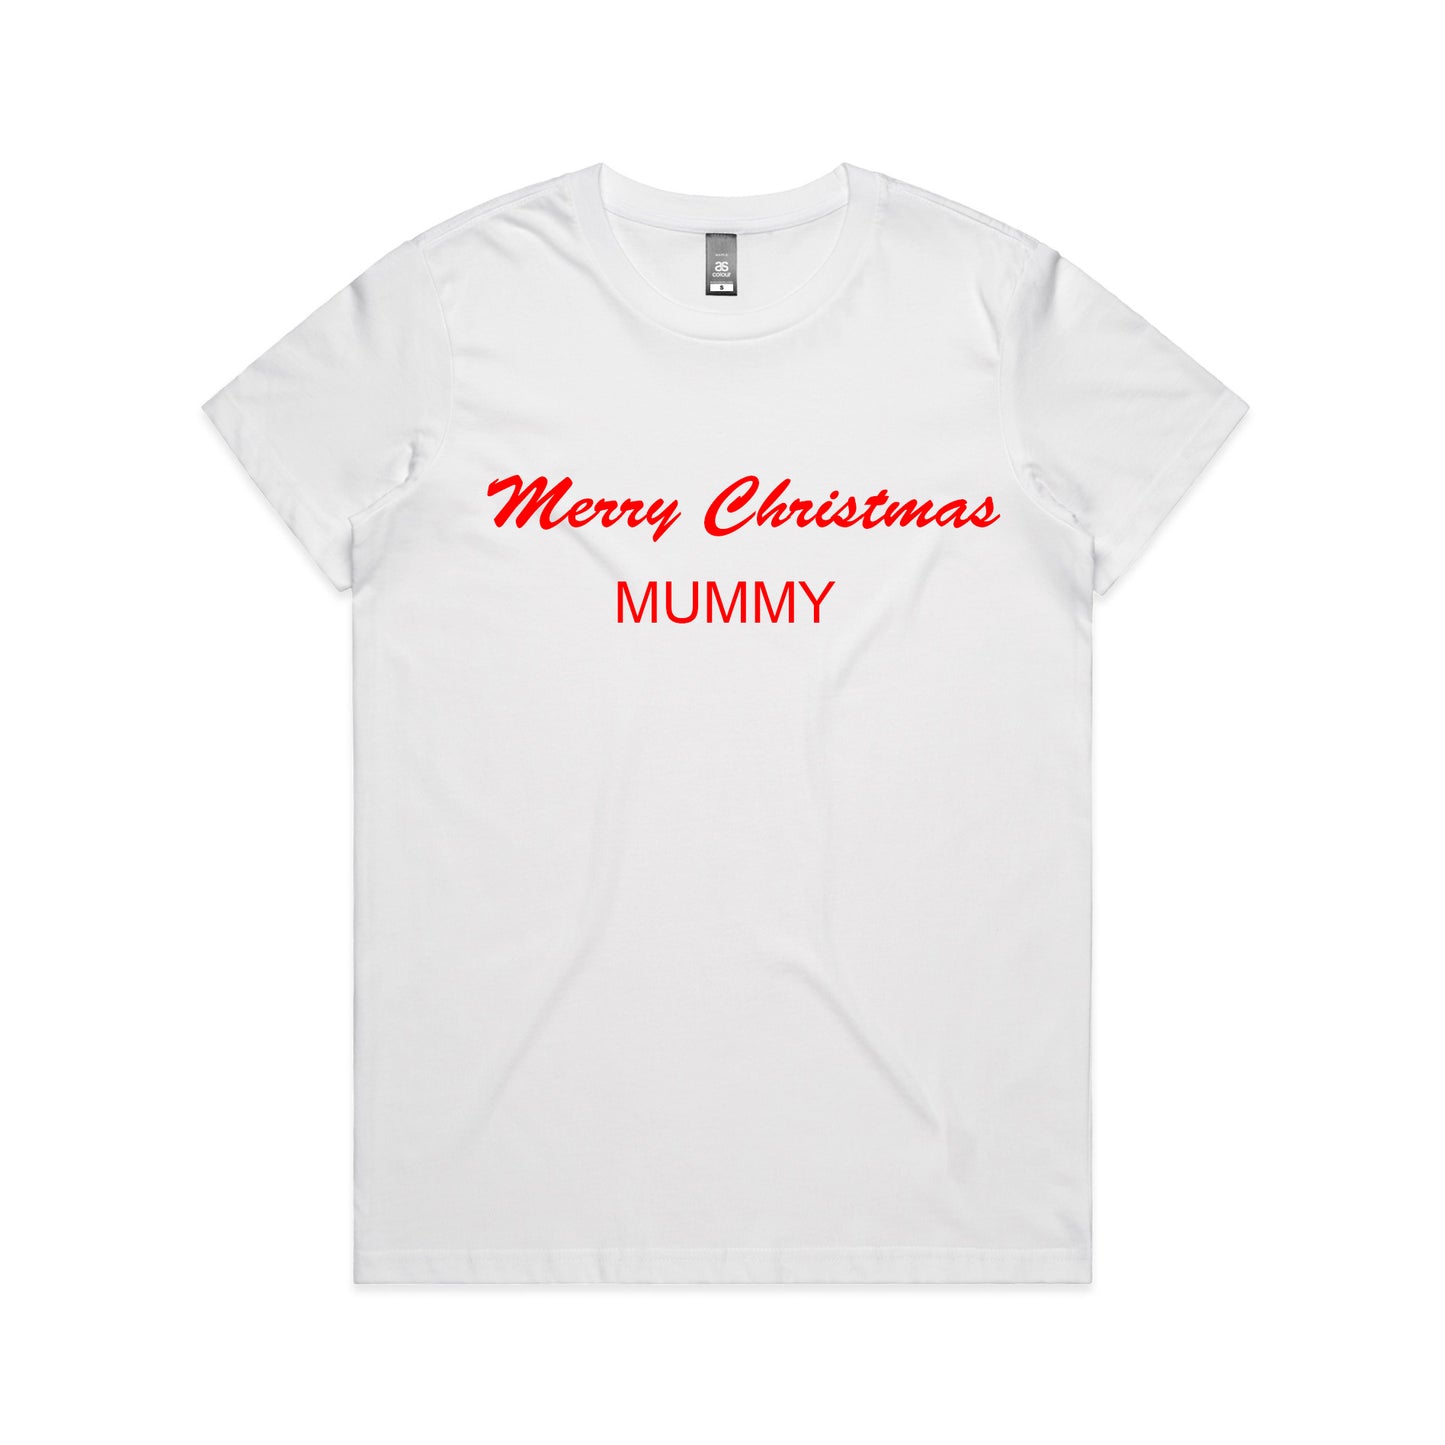 Merry Christmas Slogan - Womens Tee